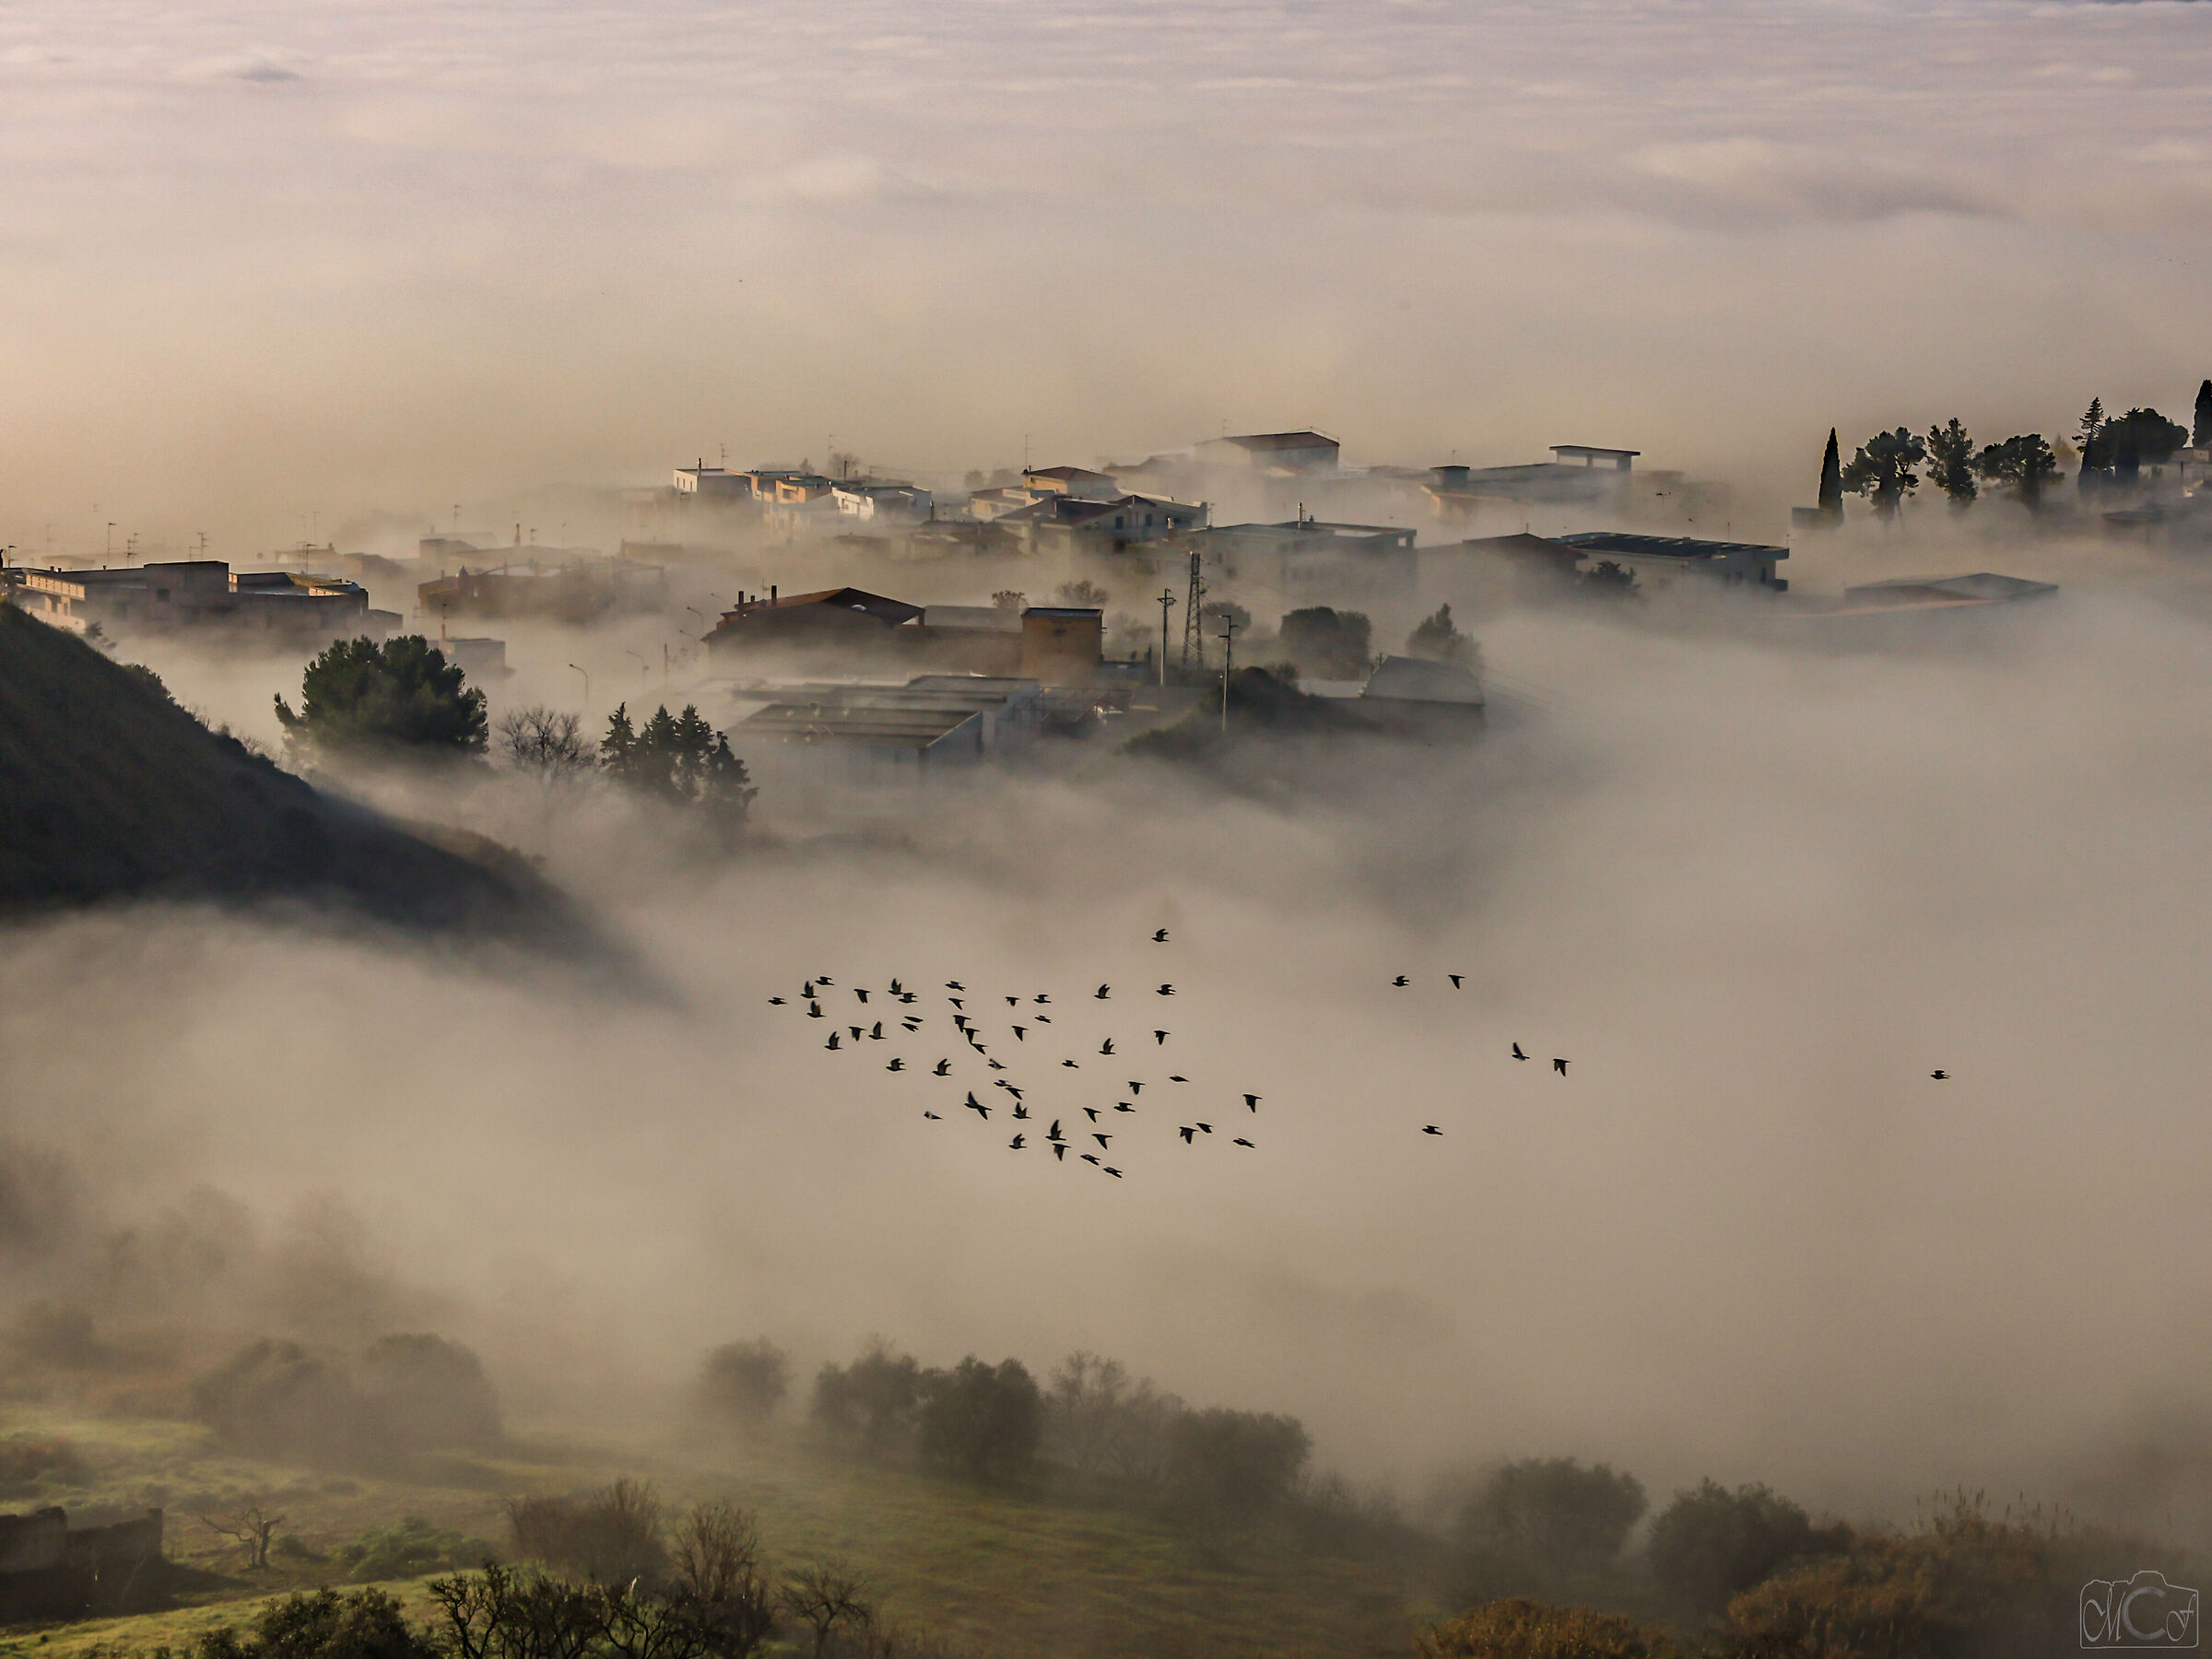 Montescaglioso (Matera) and its Sea (of fog)...